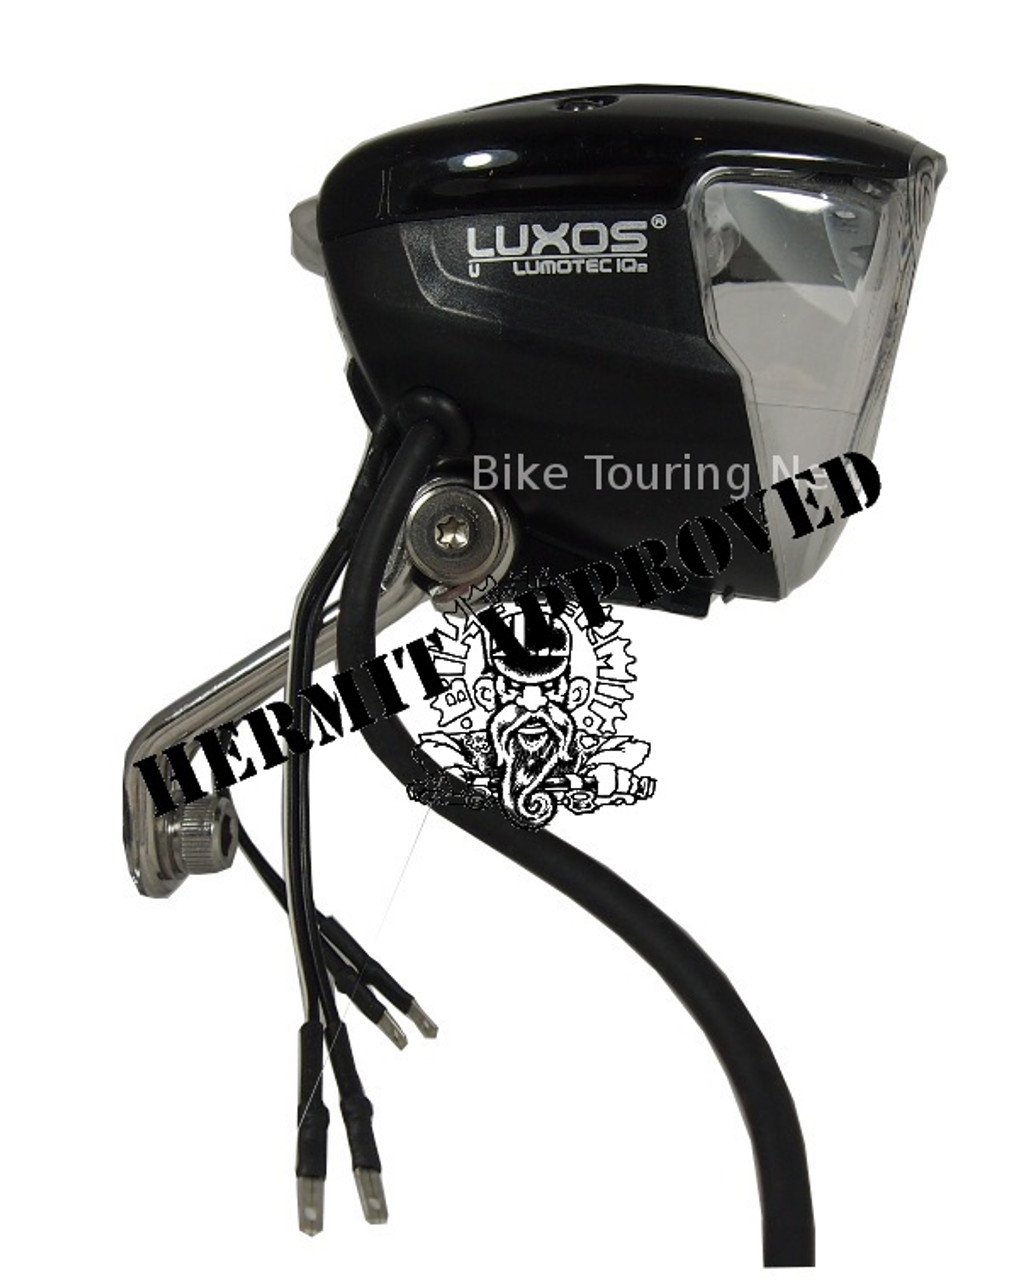 Naleving van Carry inch B&M Luxos U|Bike Touring News